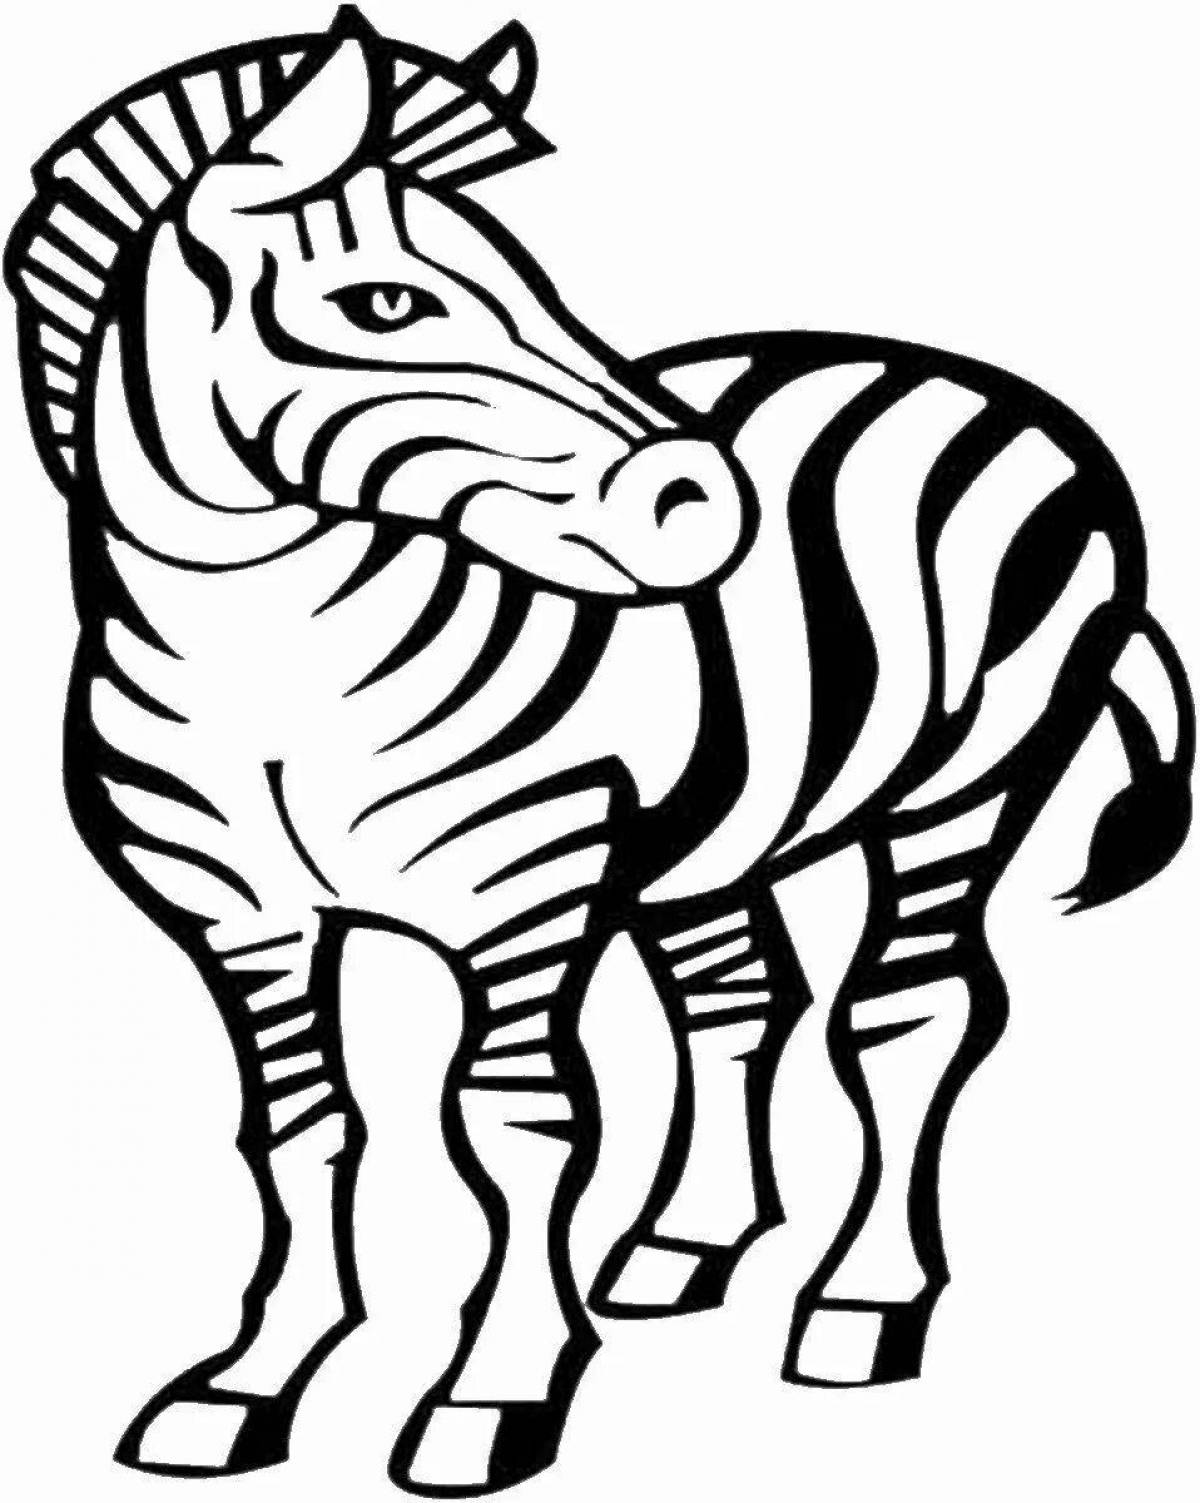 Fun zebra coloring book for kids